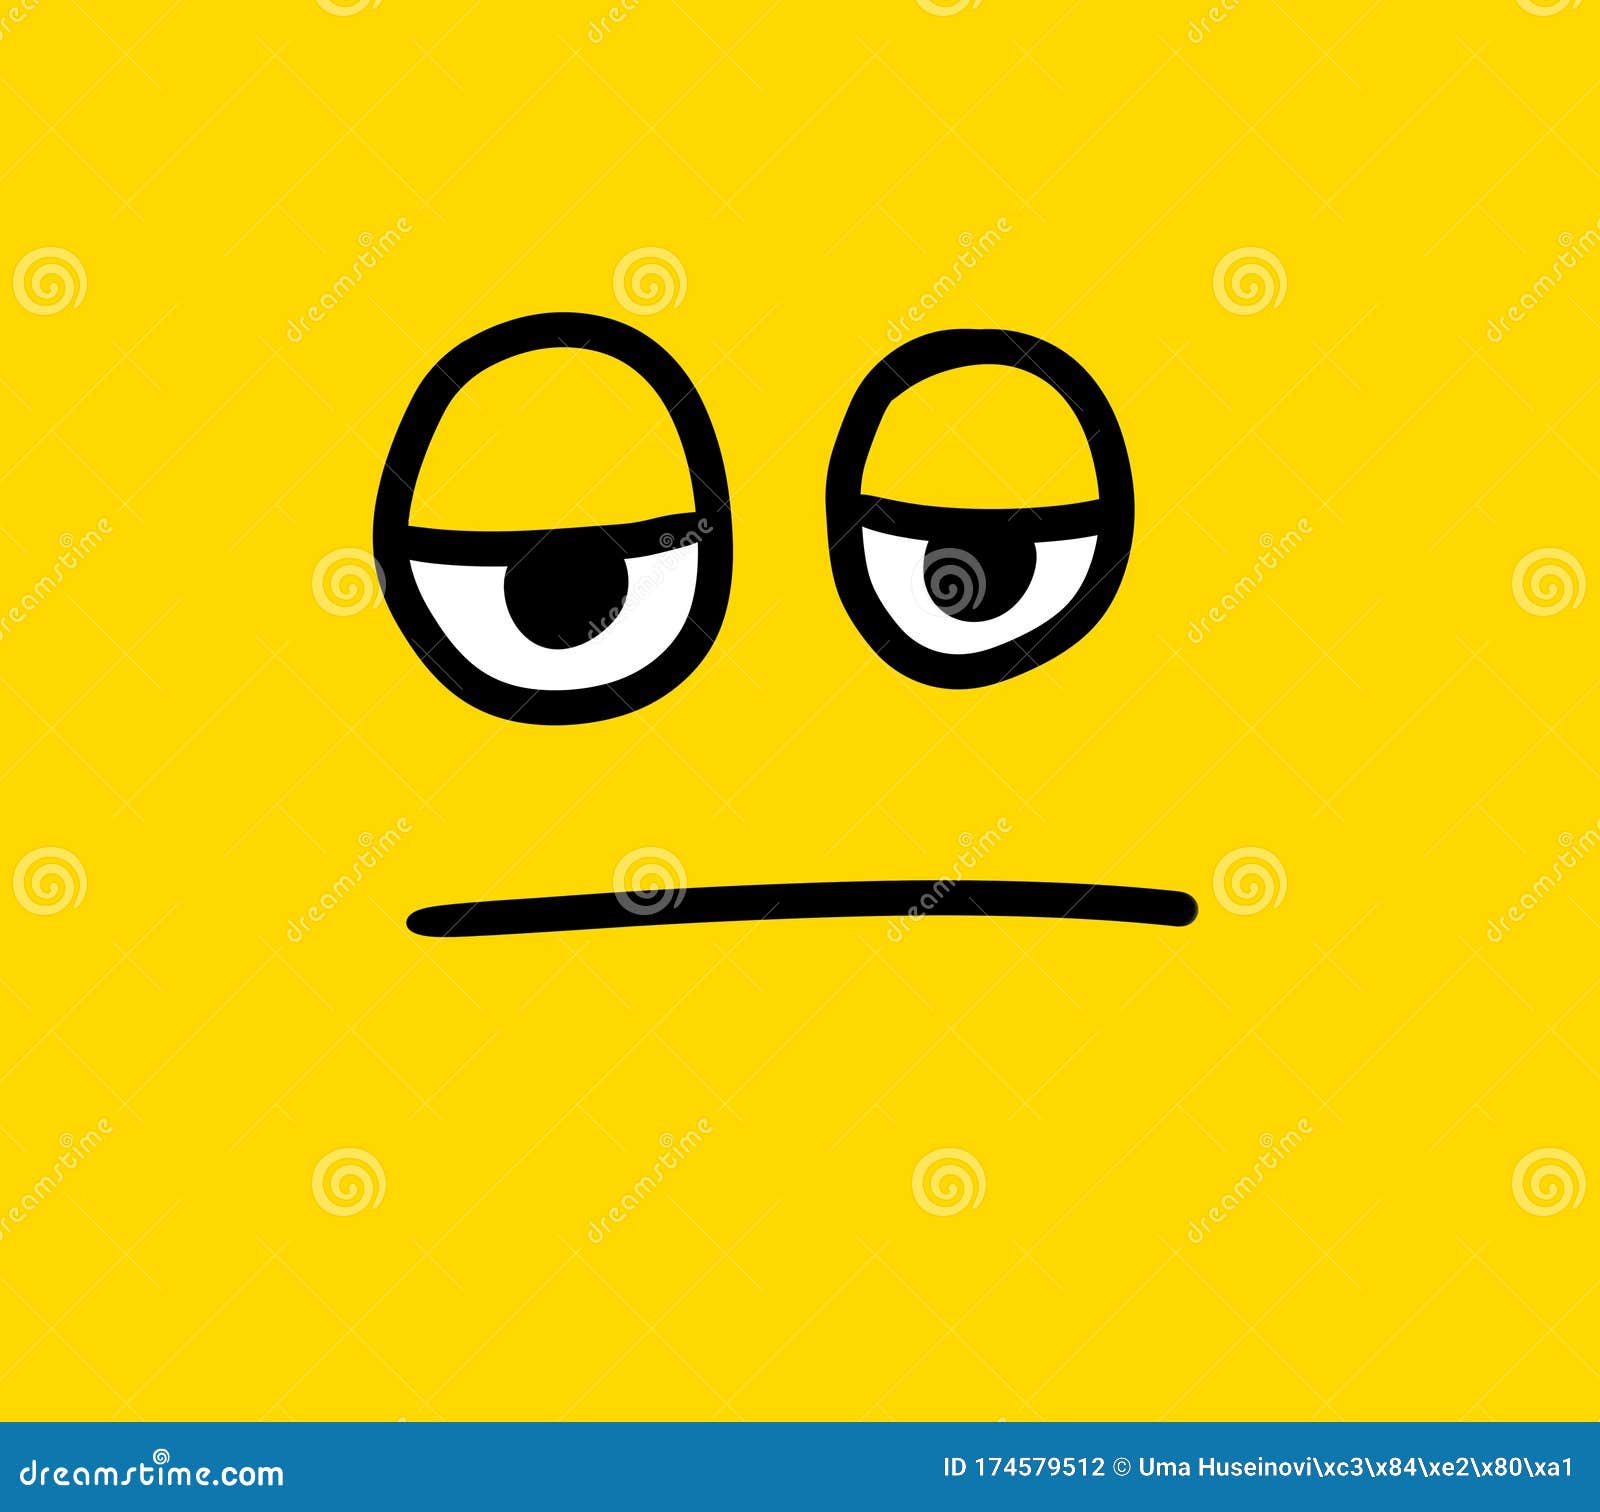 Cartoon Very Bored Emoticon Face Stock Illustration - Illustration of bored,  message: 174579512